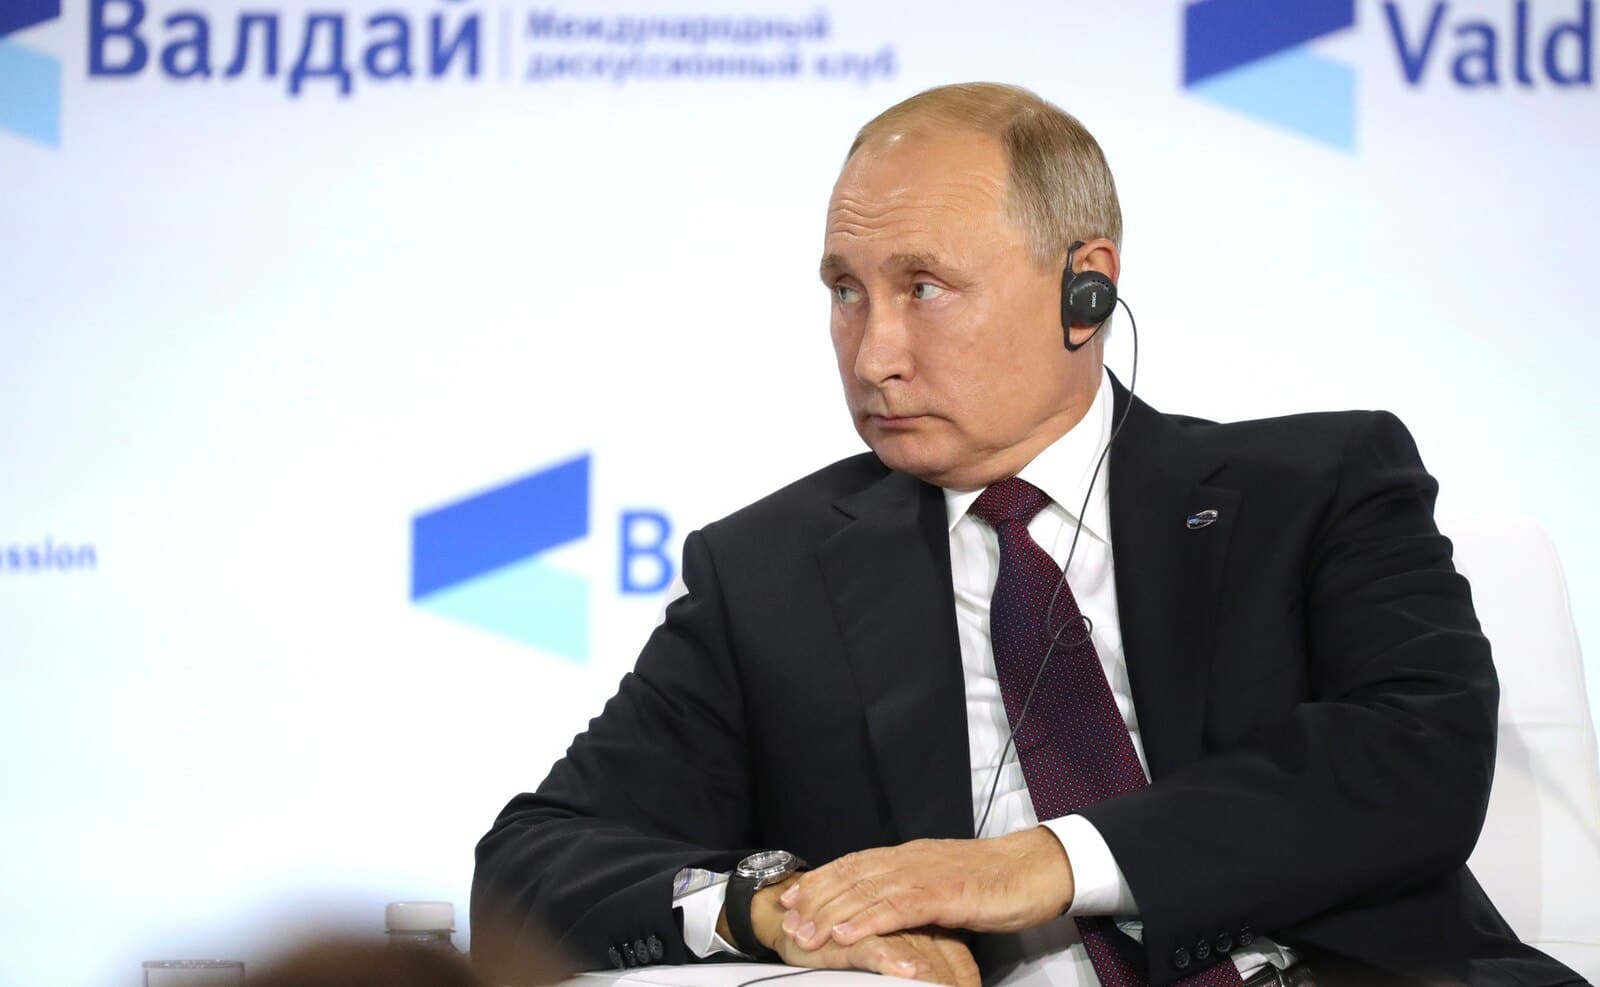 Putin’s Valdai Speech, What You Need to Know